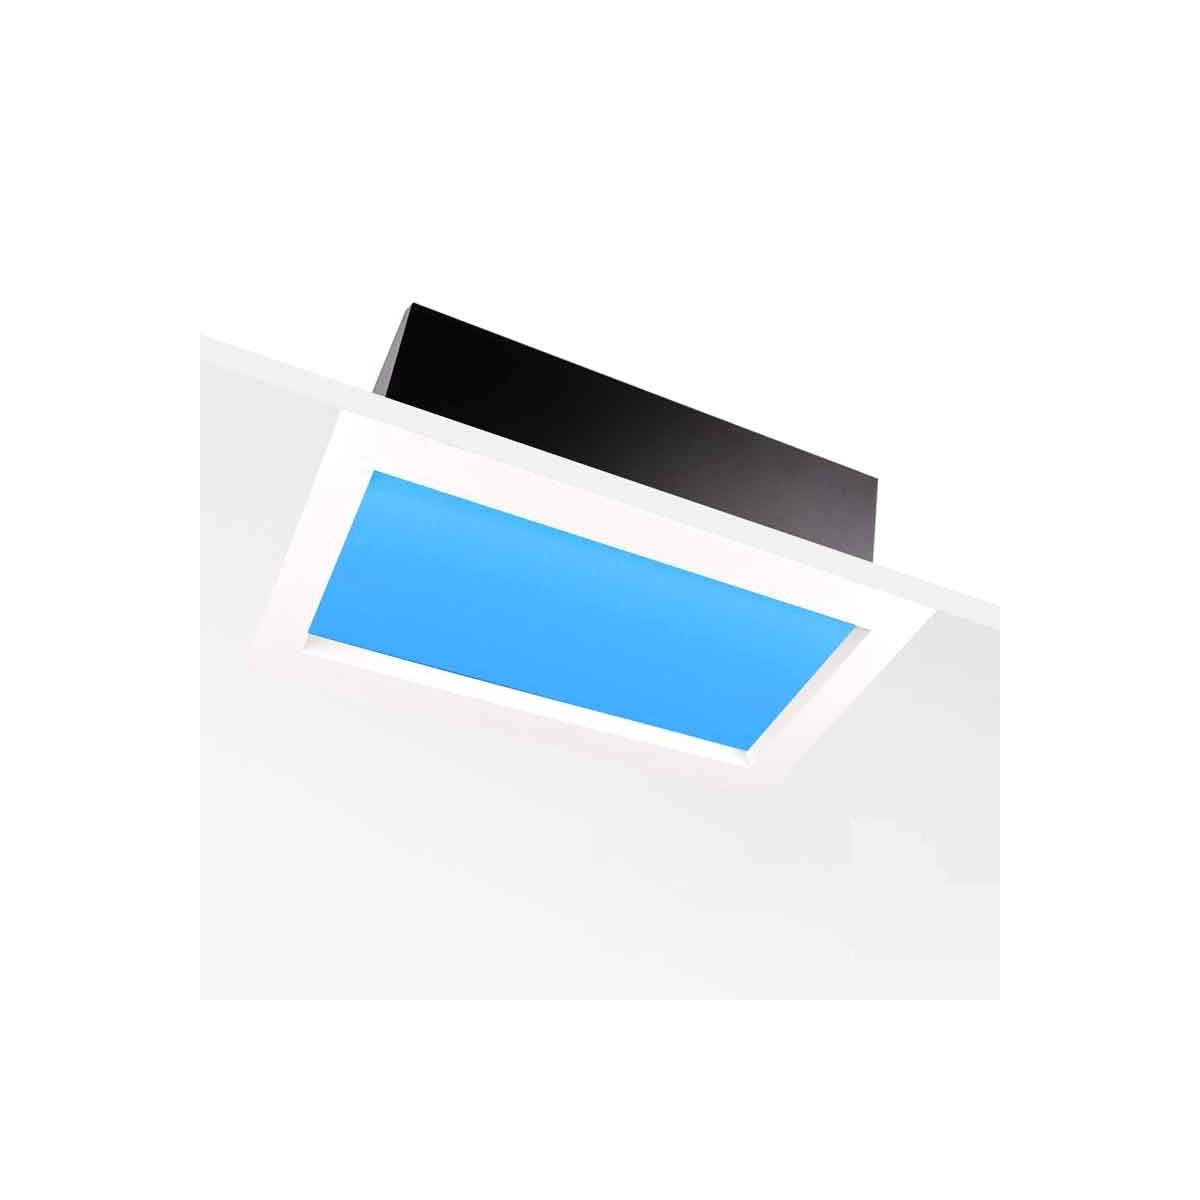 Panel LED "SMART Blue Skylight" - Efecto cielo - Daylight - 50W - 60x30cm